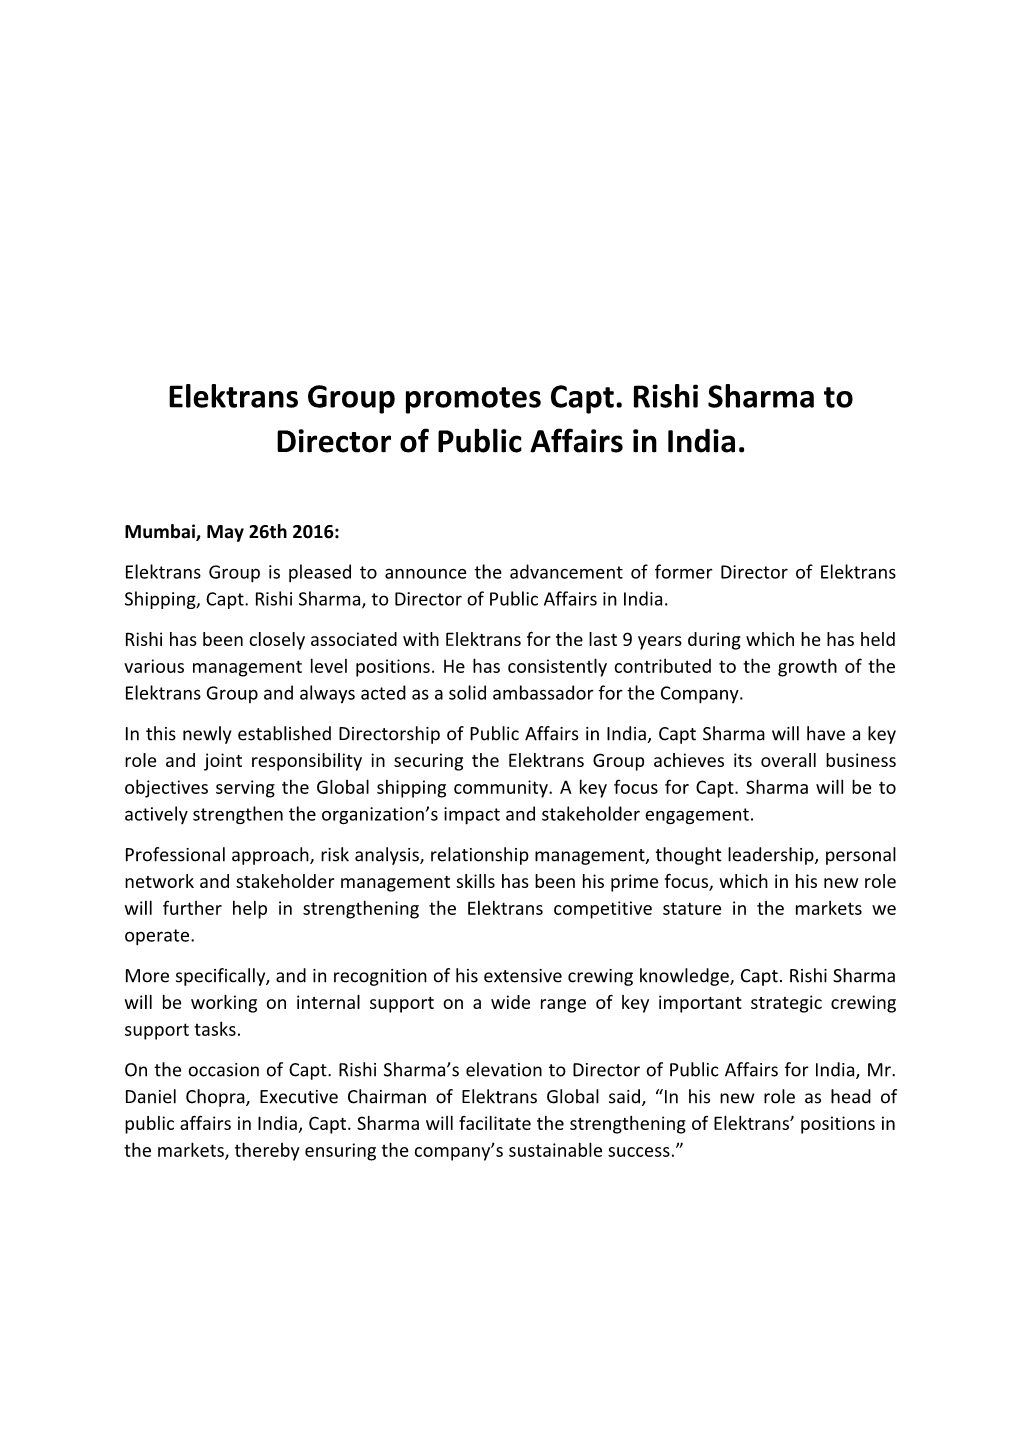 Elektrans Group Promotes Capt. Rishi Sharma to Director of Public Affairs in India